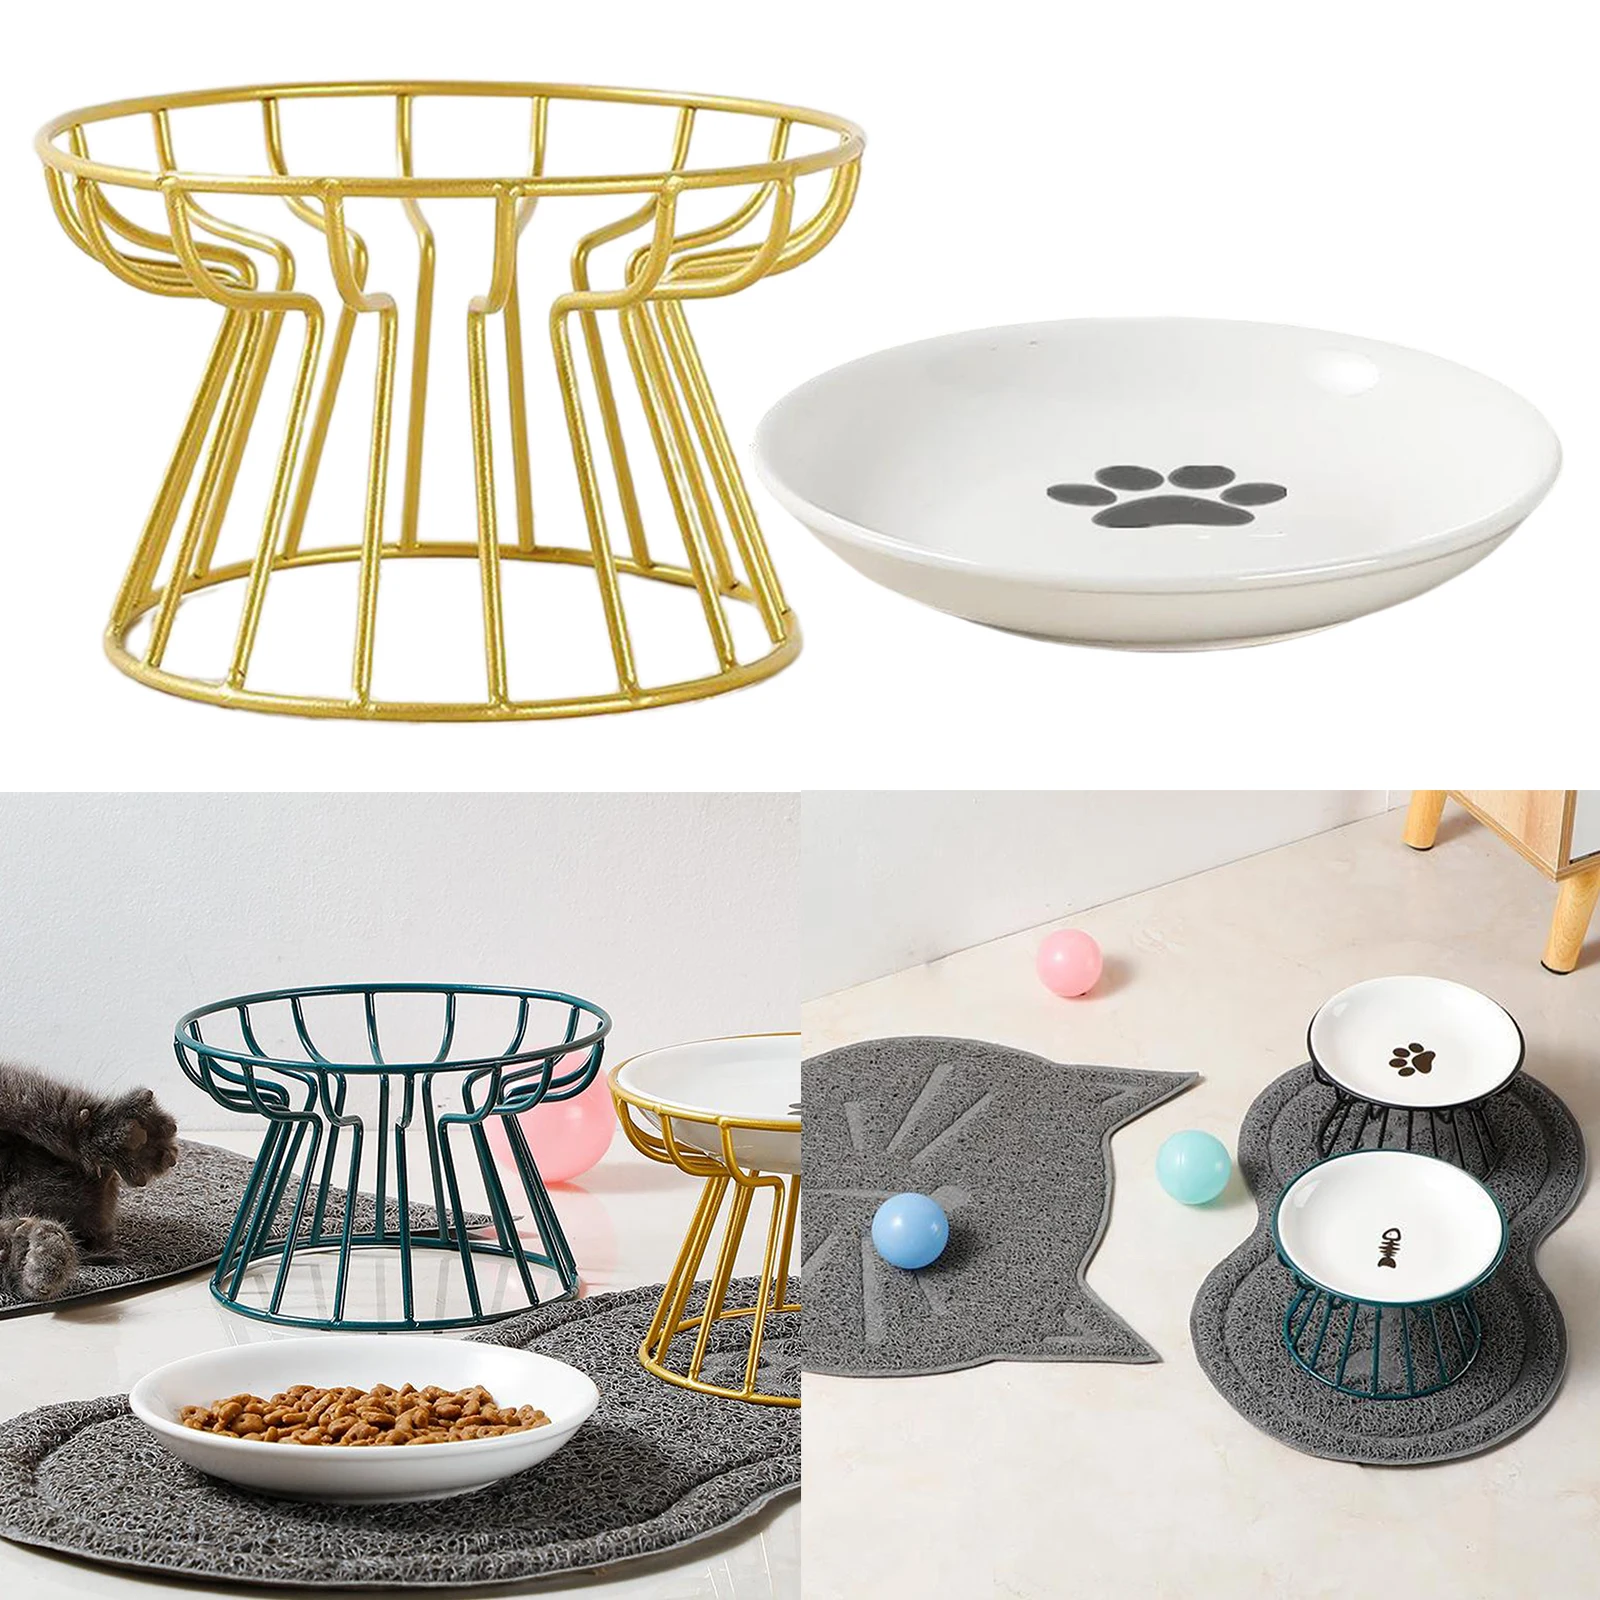 Ceramic Pet Bowl Iron Holder Shelf Stand Pet Single Bowl Feeding Food Bowls for Cat Dog